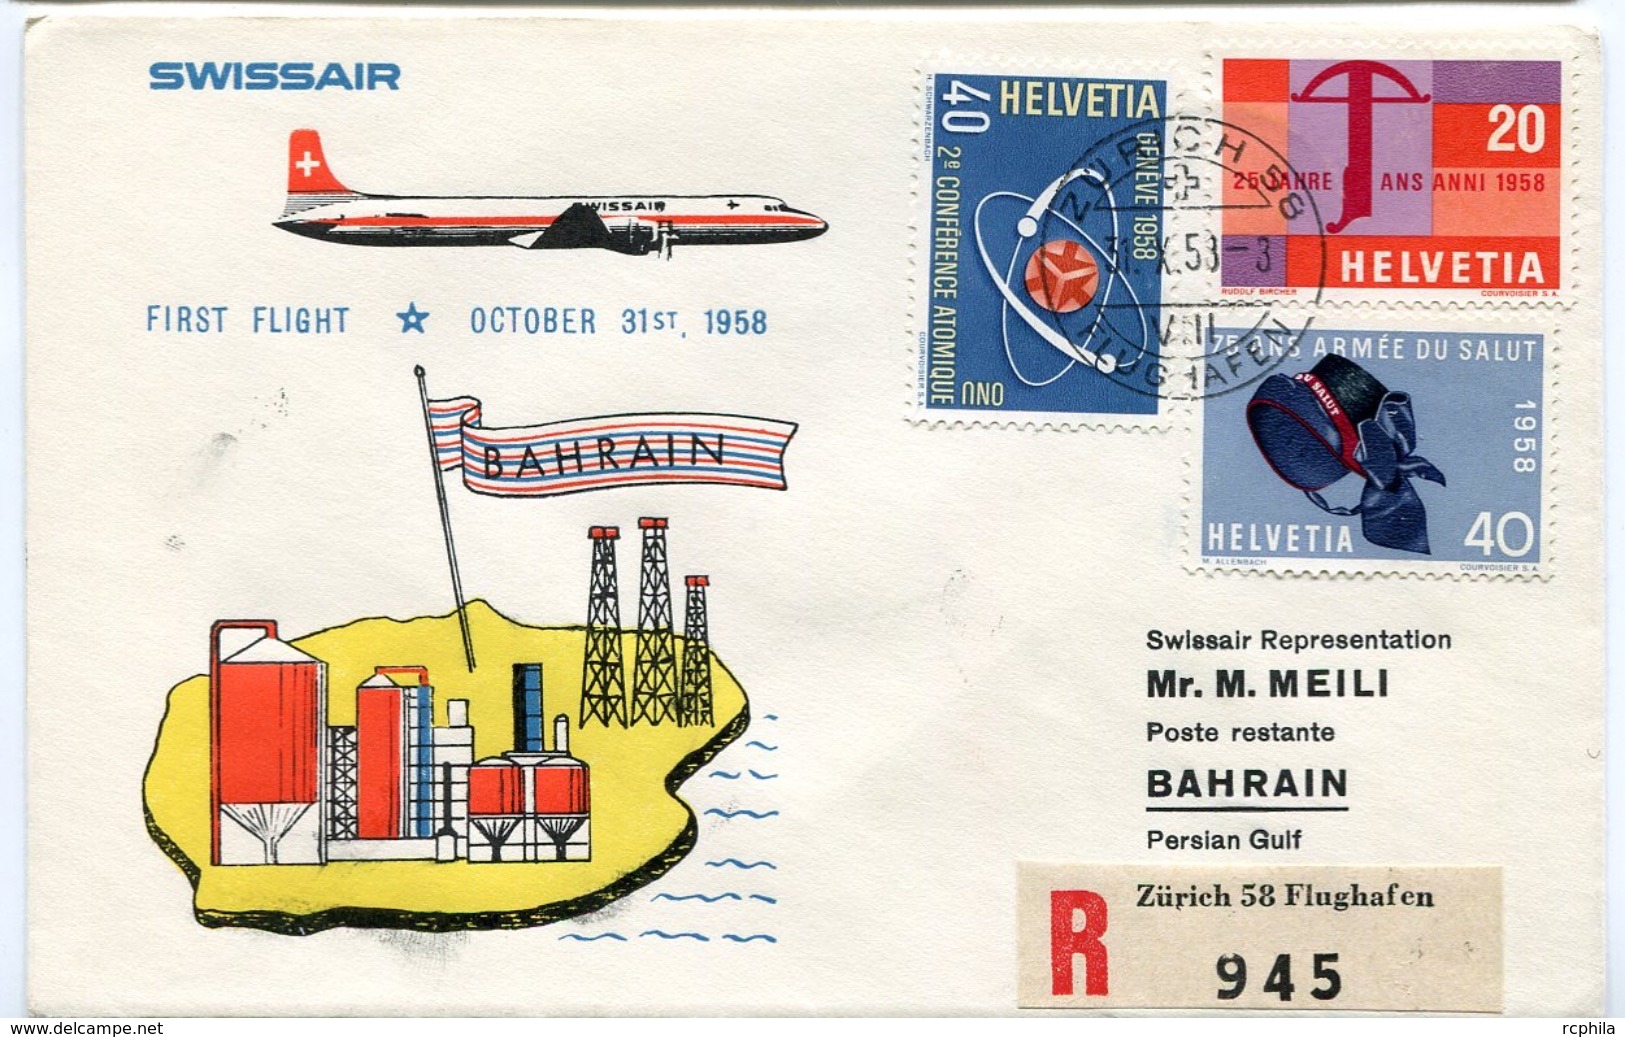 RC 6628 SUISSE 1958 1er VOL SWISSAIR ZURICH - BAHRAIN GULF PERSIQUE FFC LETTRE COVER - Primeros Vuelos